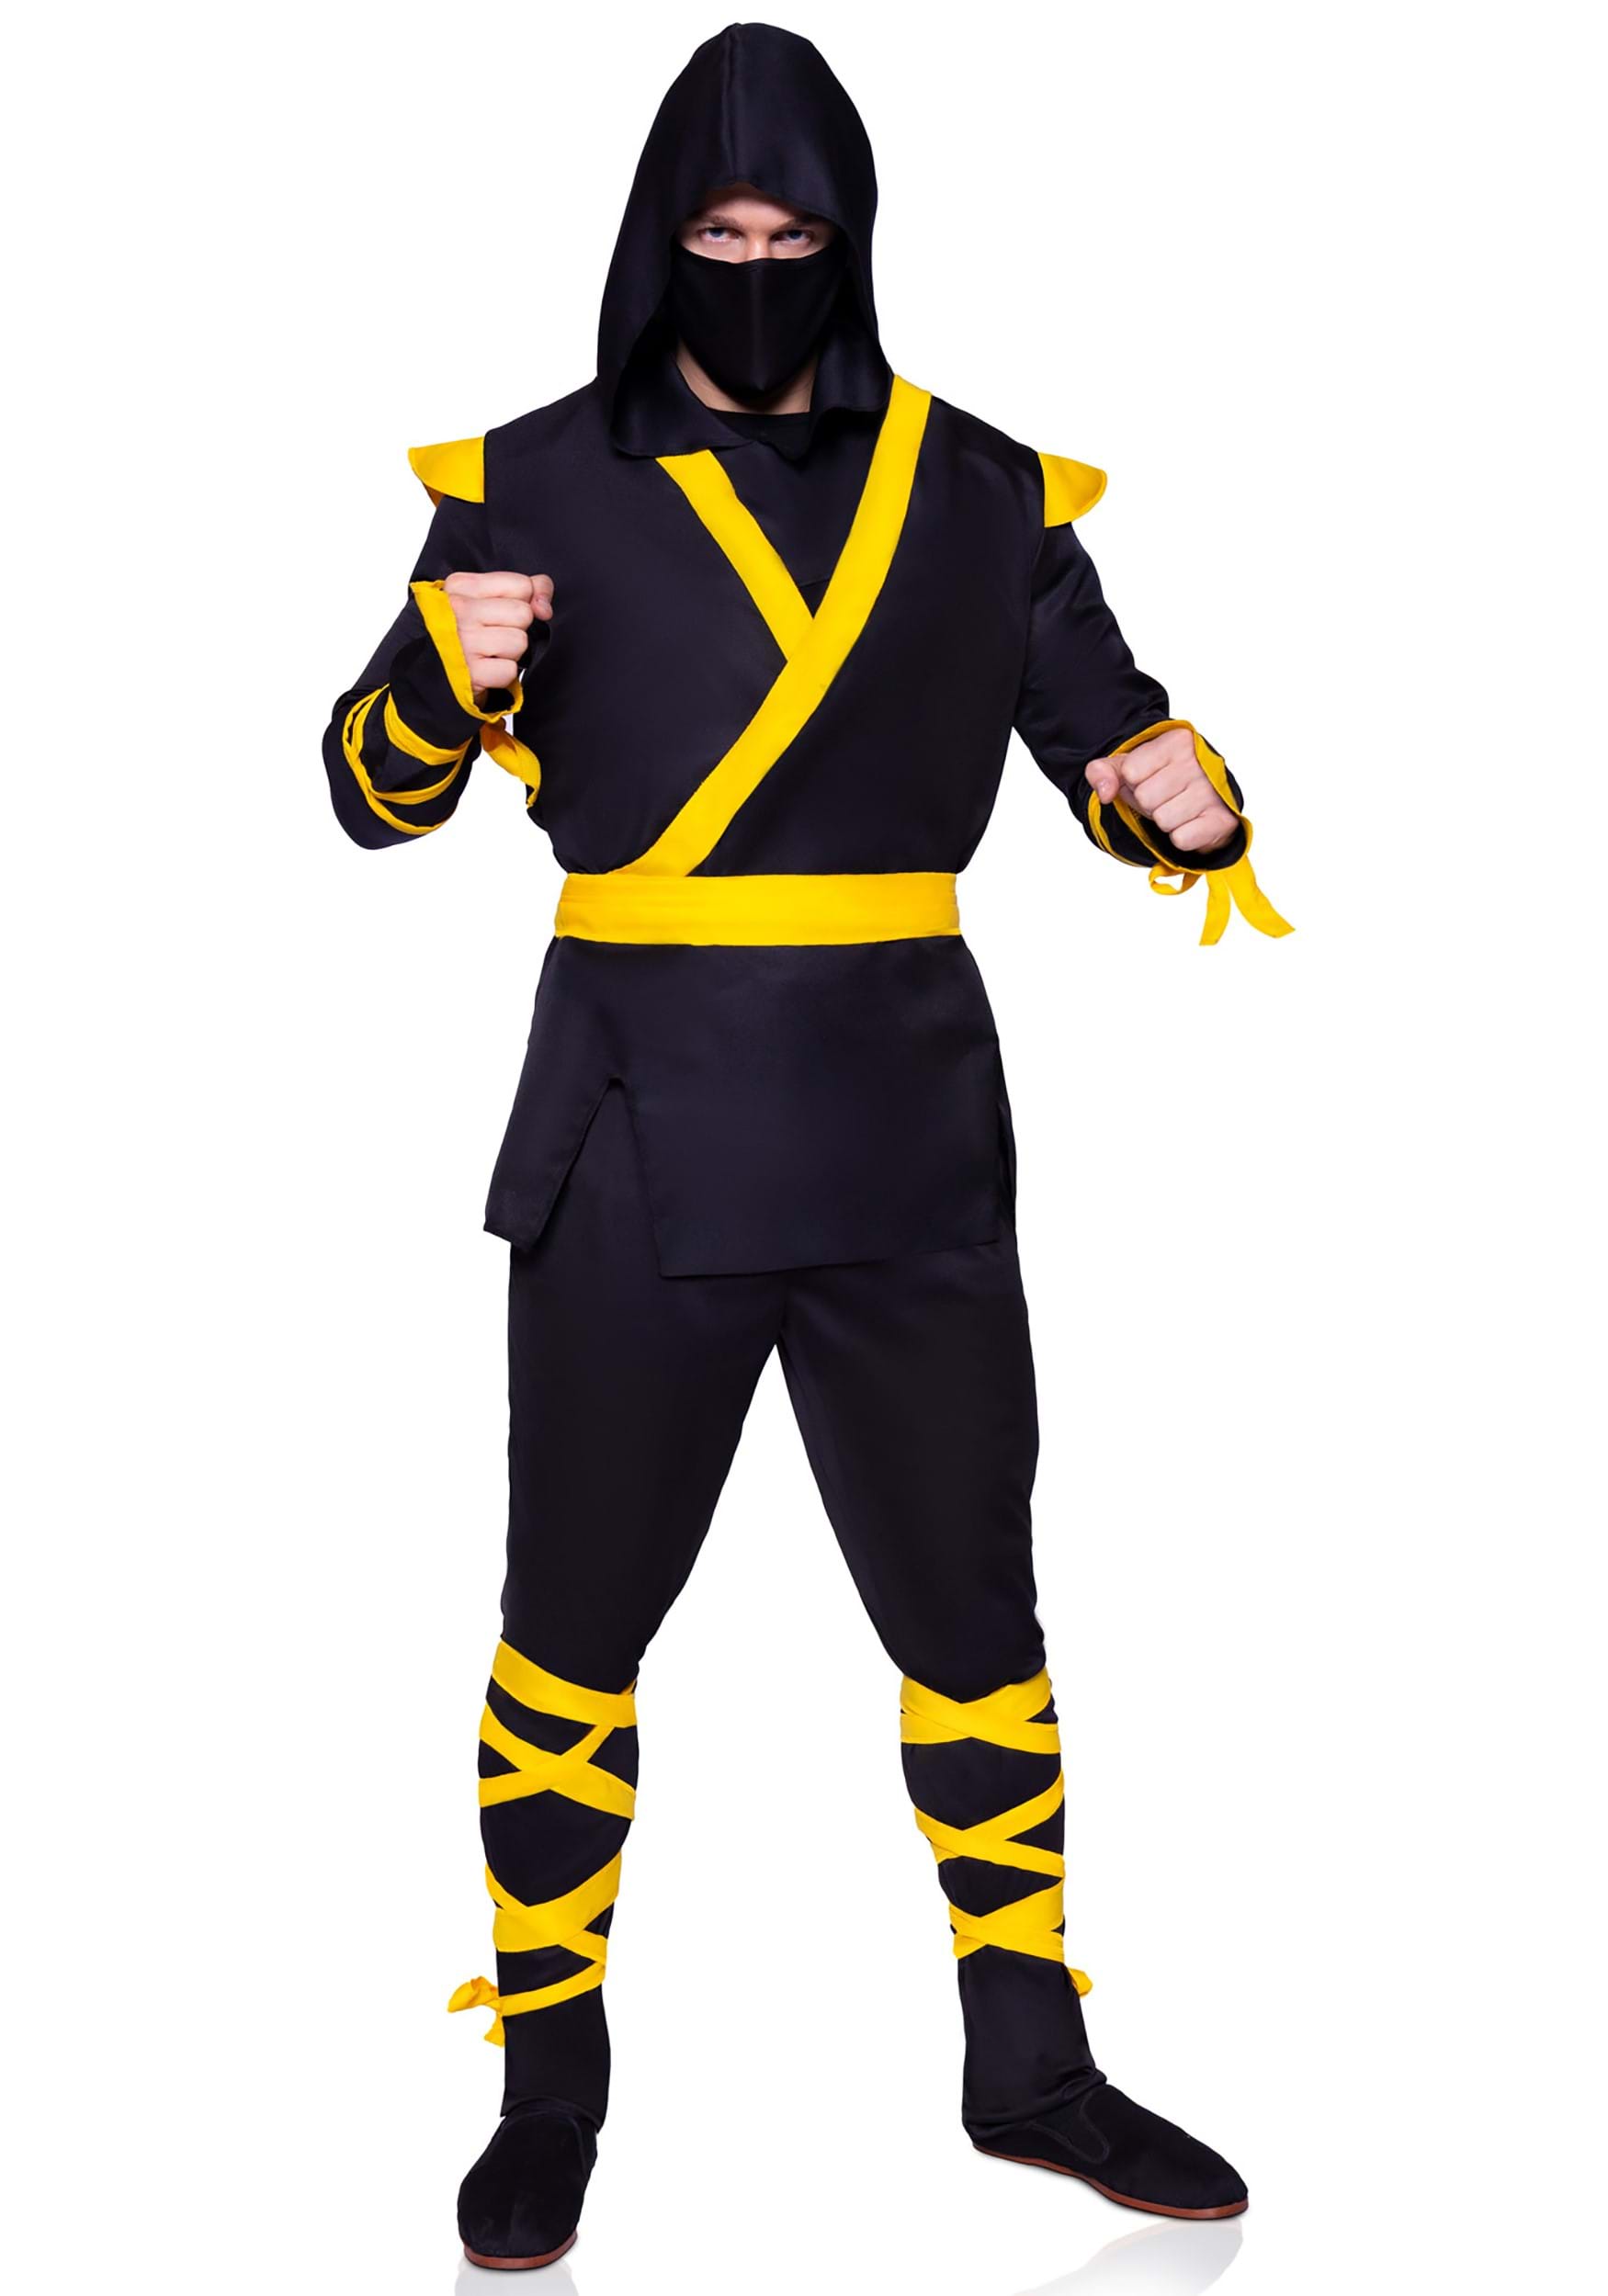 California Costumes Stealth Ninja Men's Costume, Medium